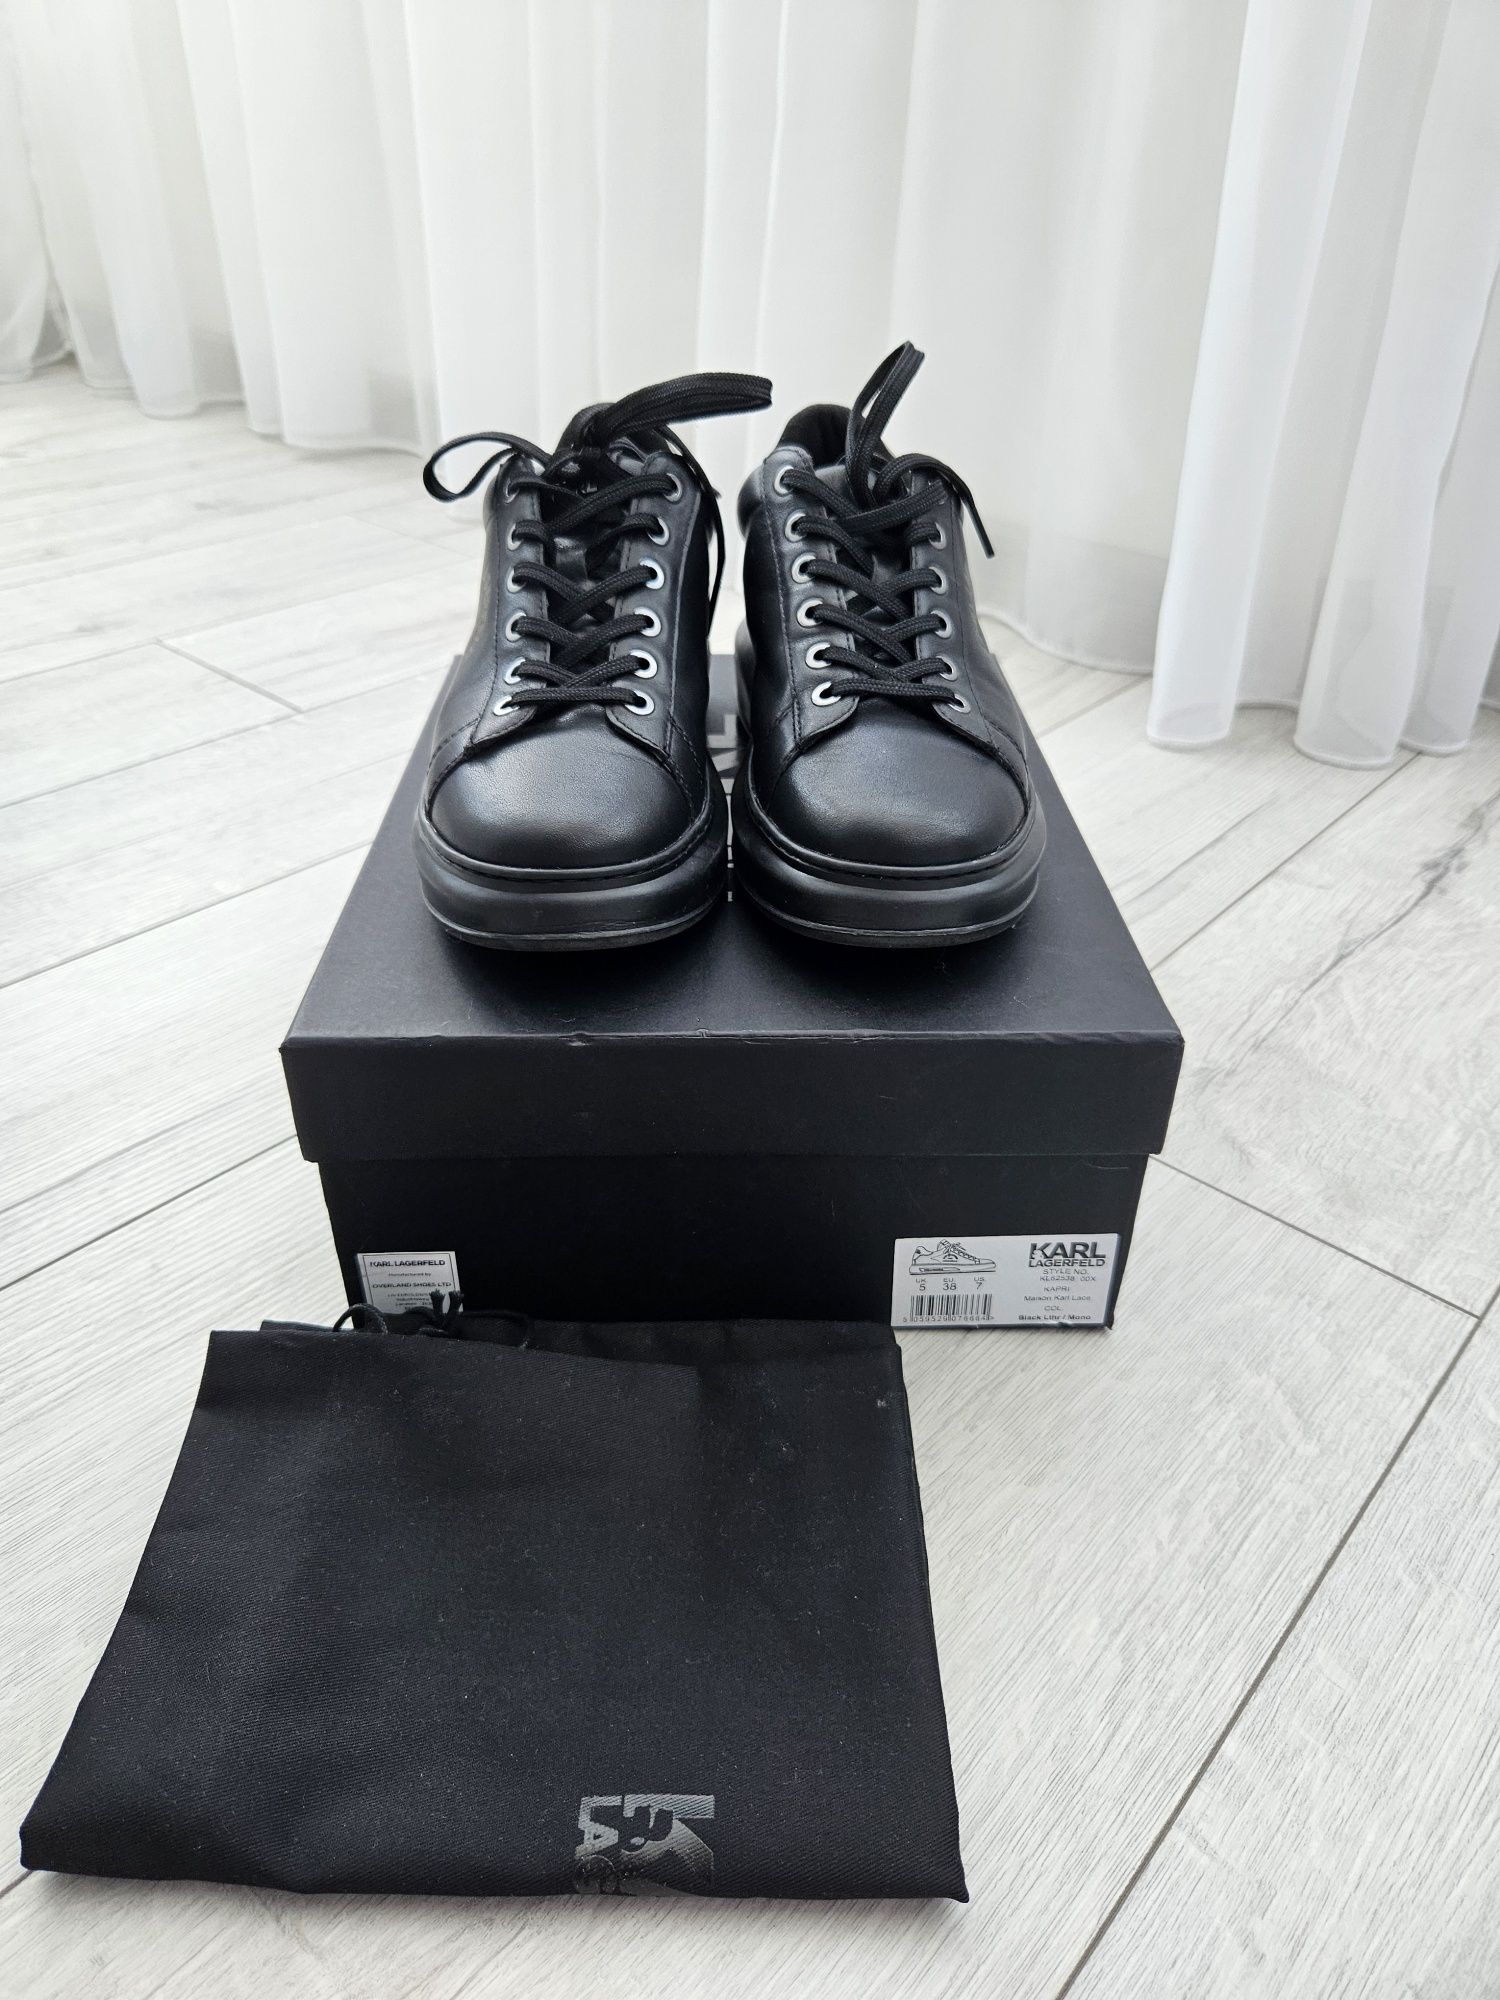 Sneakers Karl Lagerfeld, originali